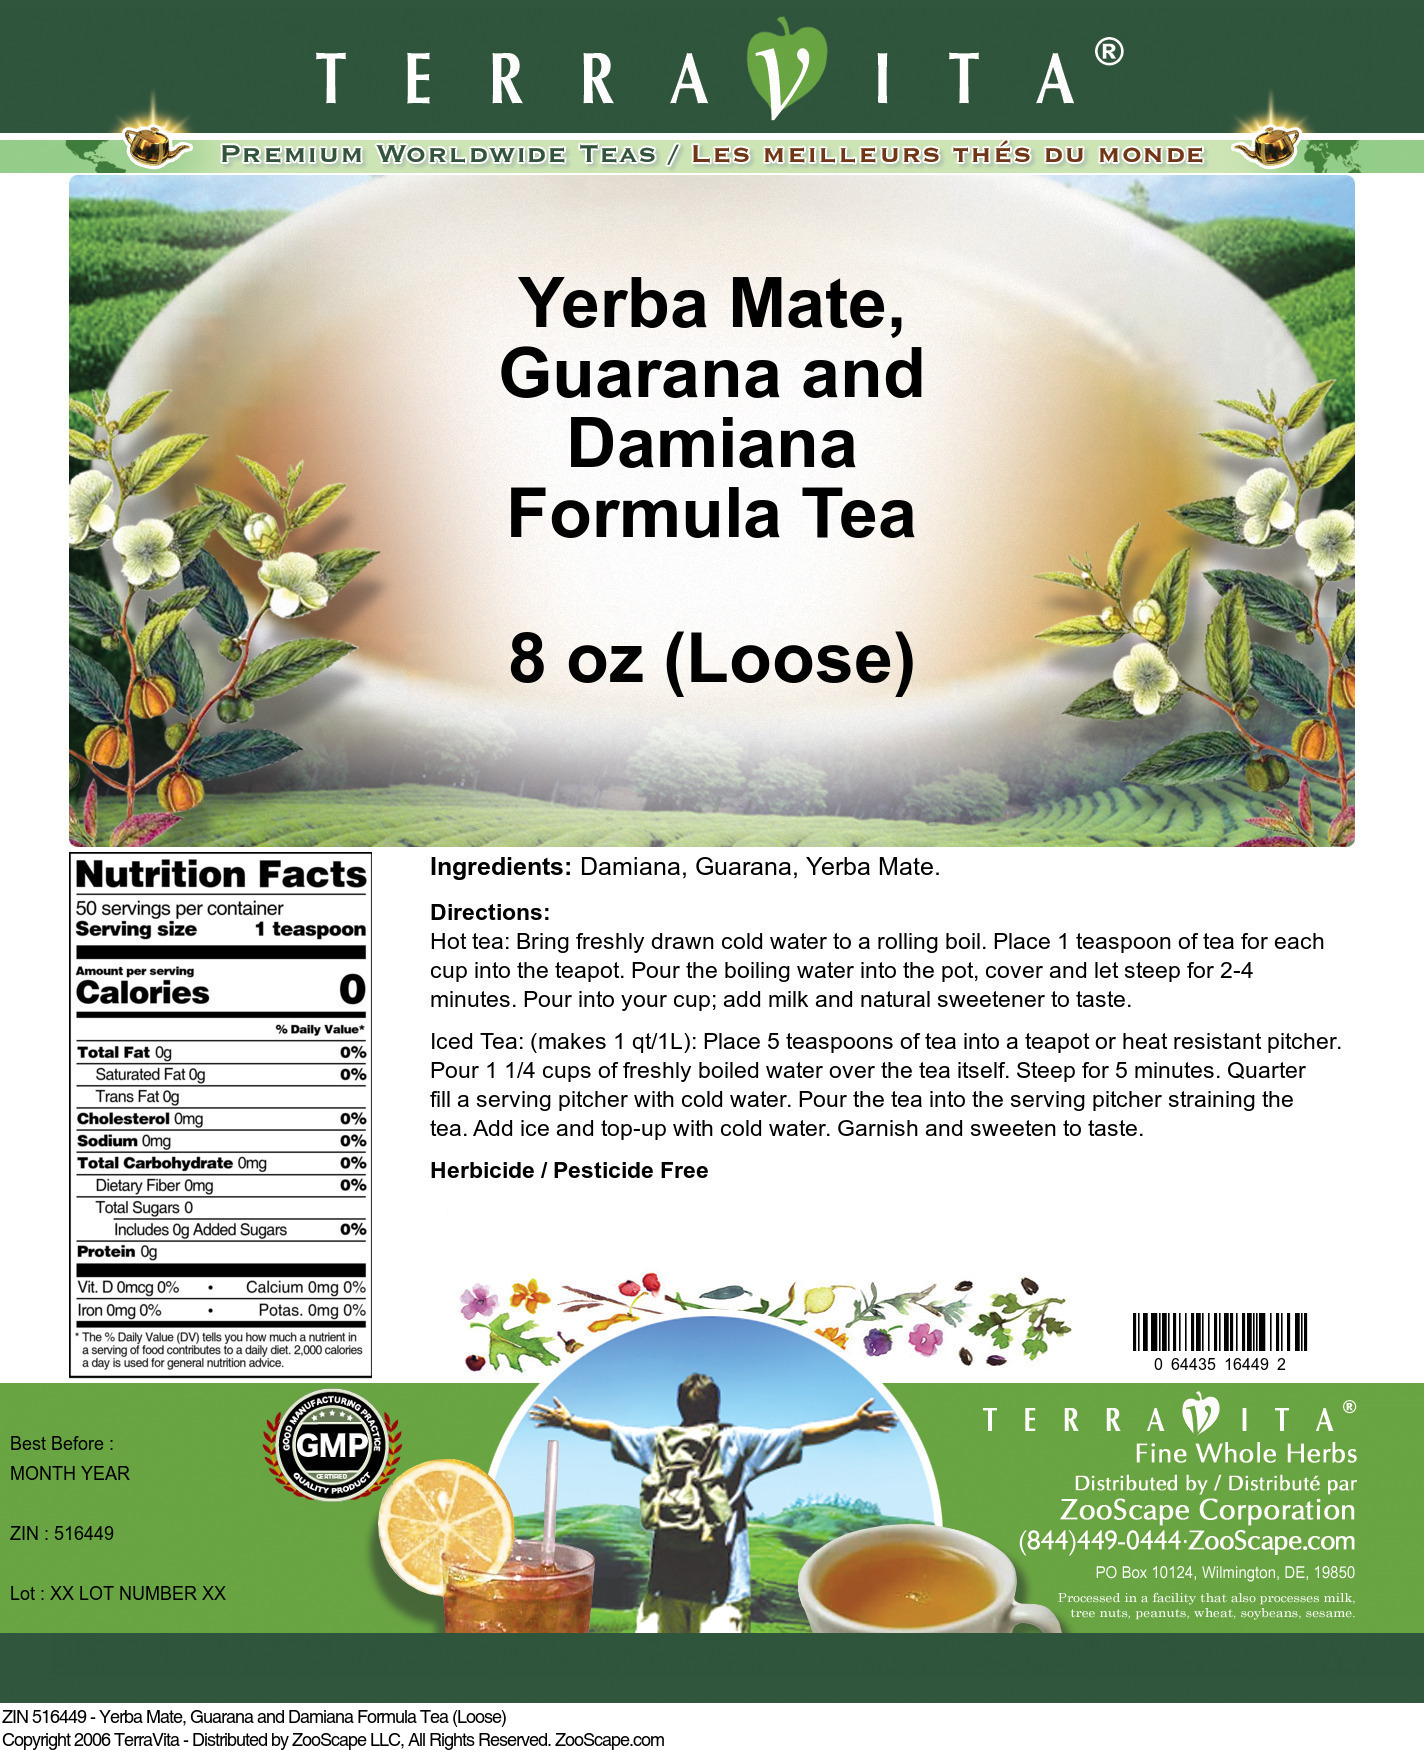 Yerba Mate, Guarana and Damiana Formula Tea (Loose) - Label